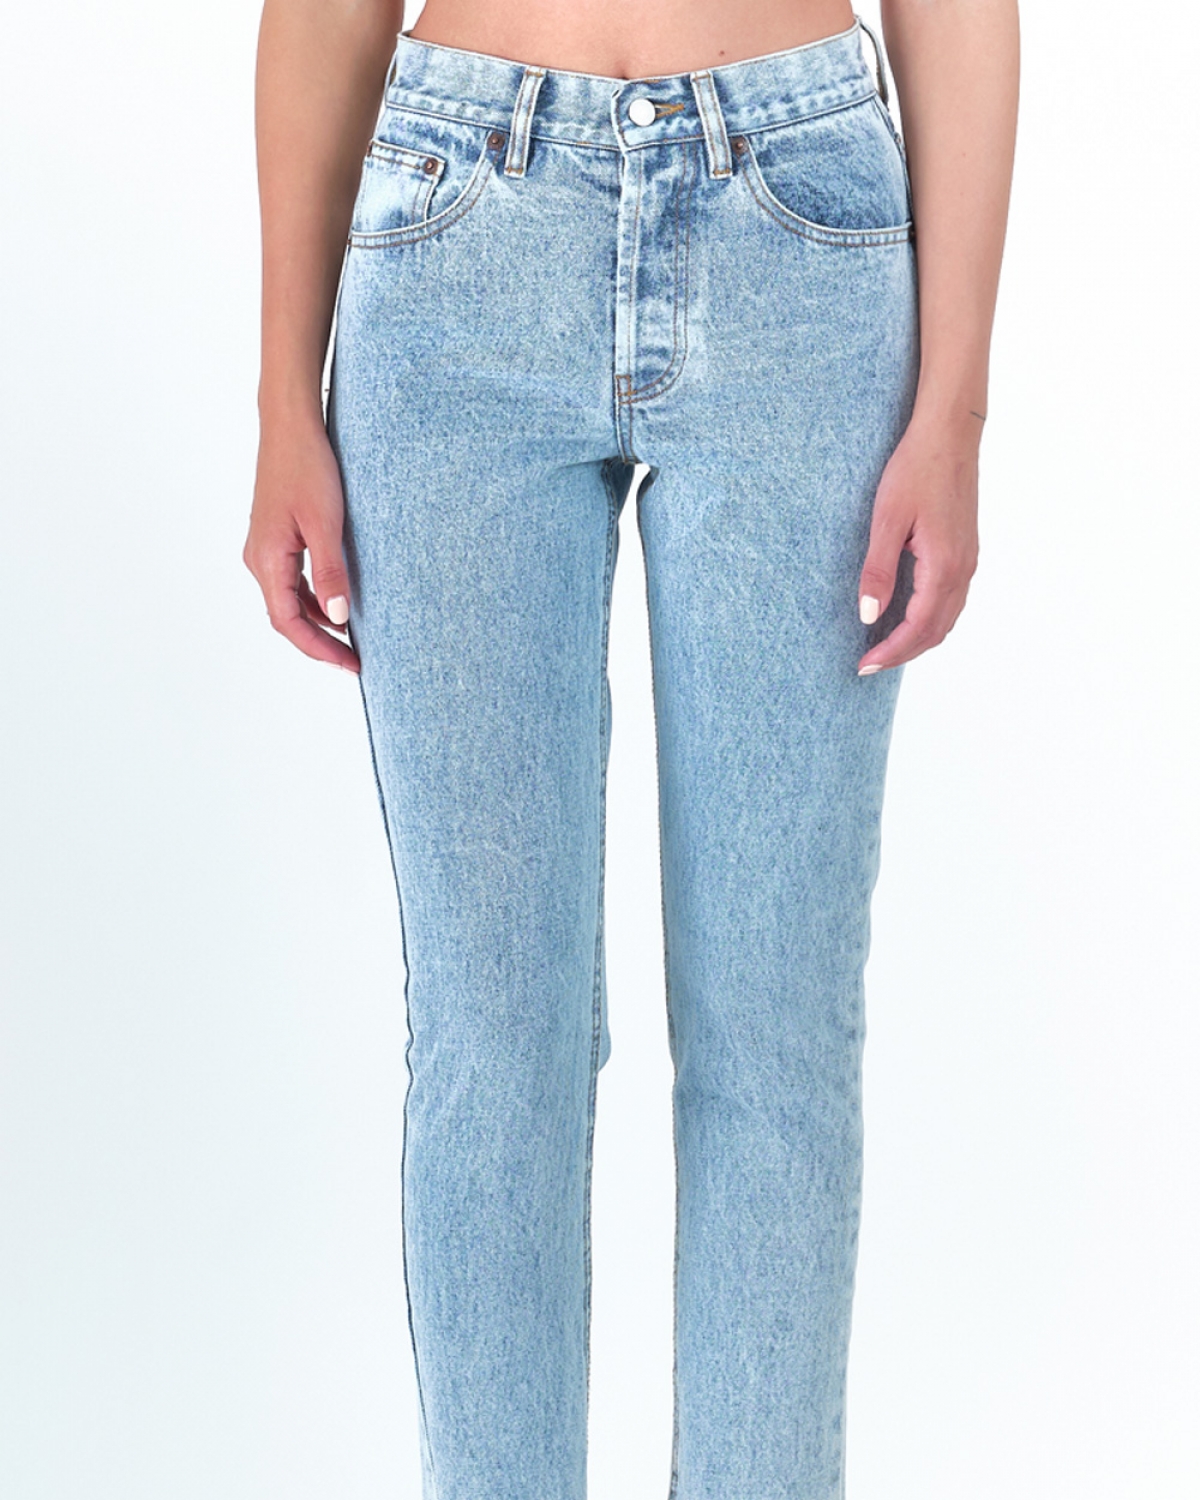 Kelly Barrel Cropped Jeans - Fashionnoiz